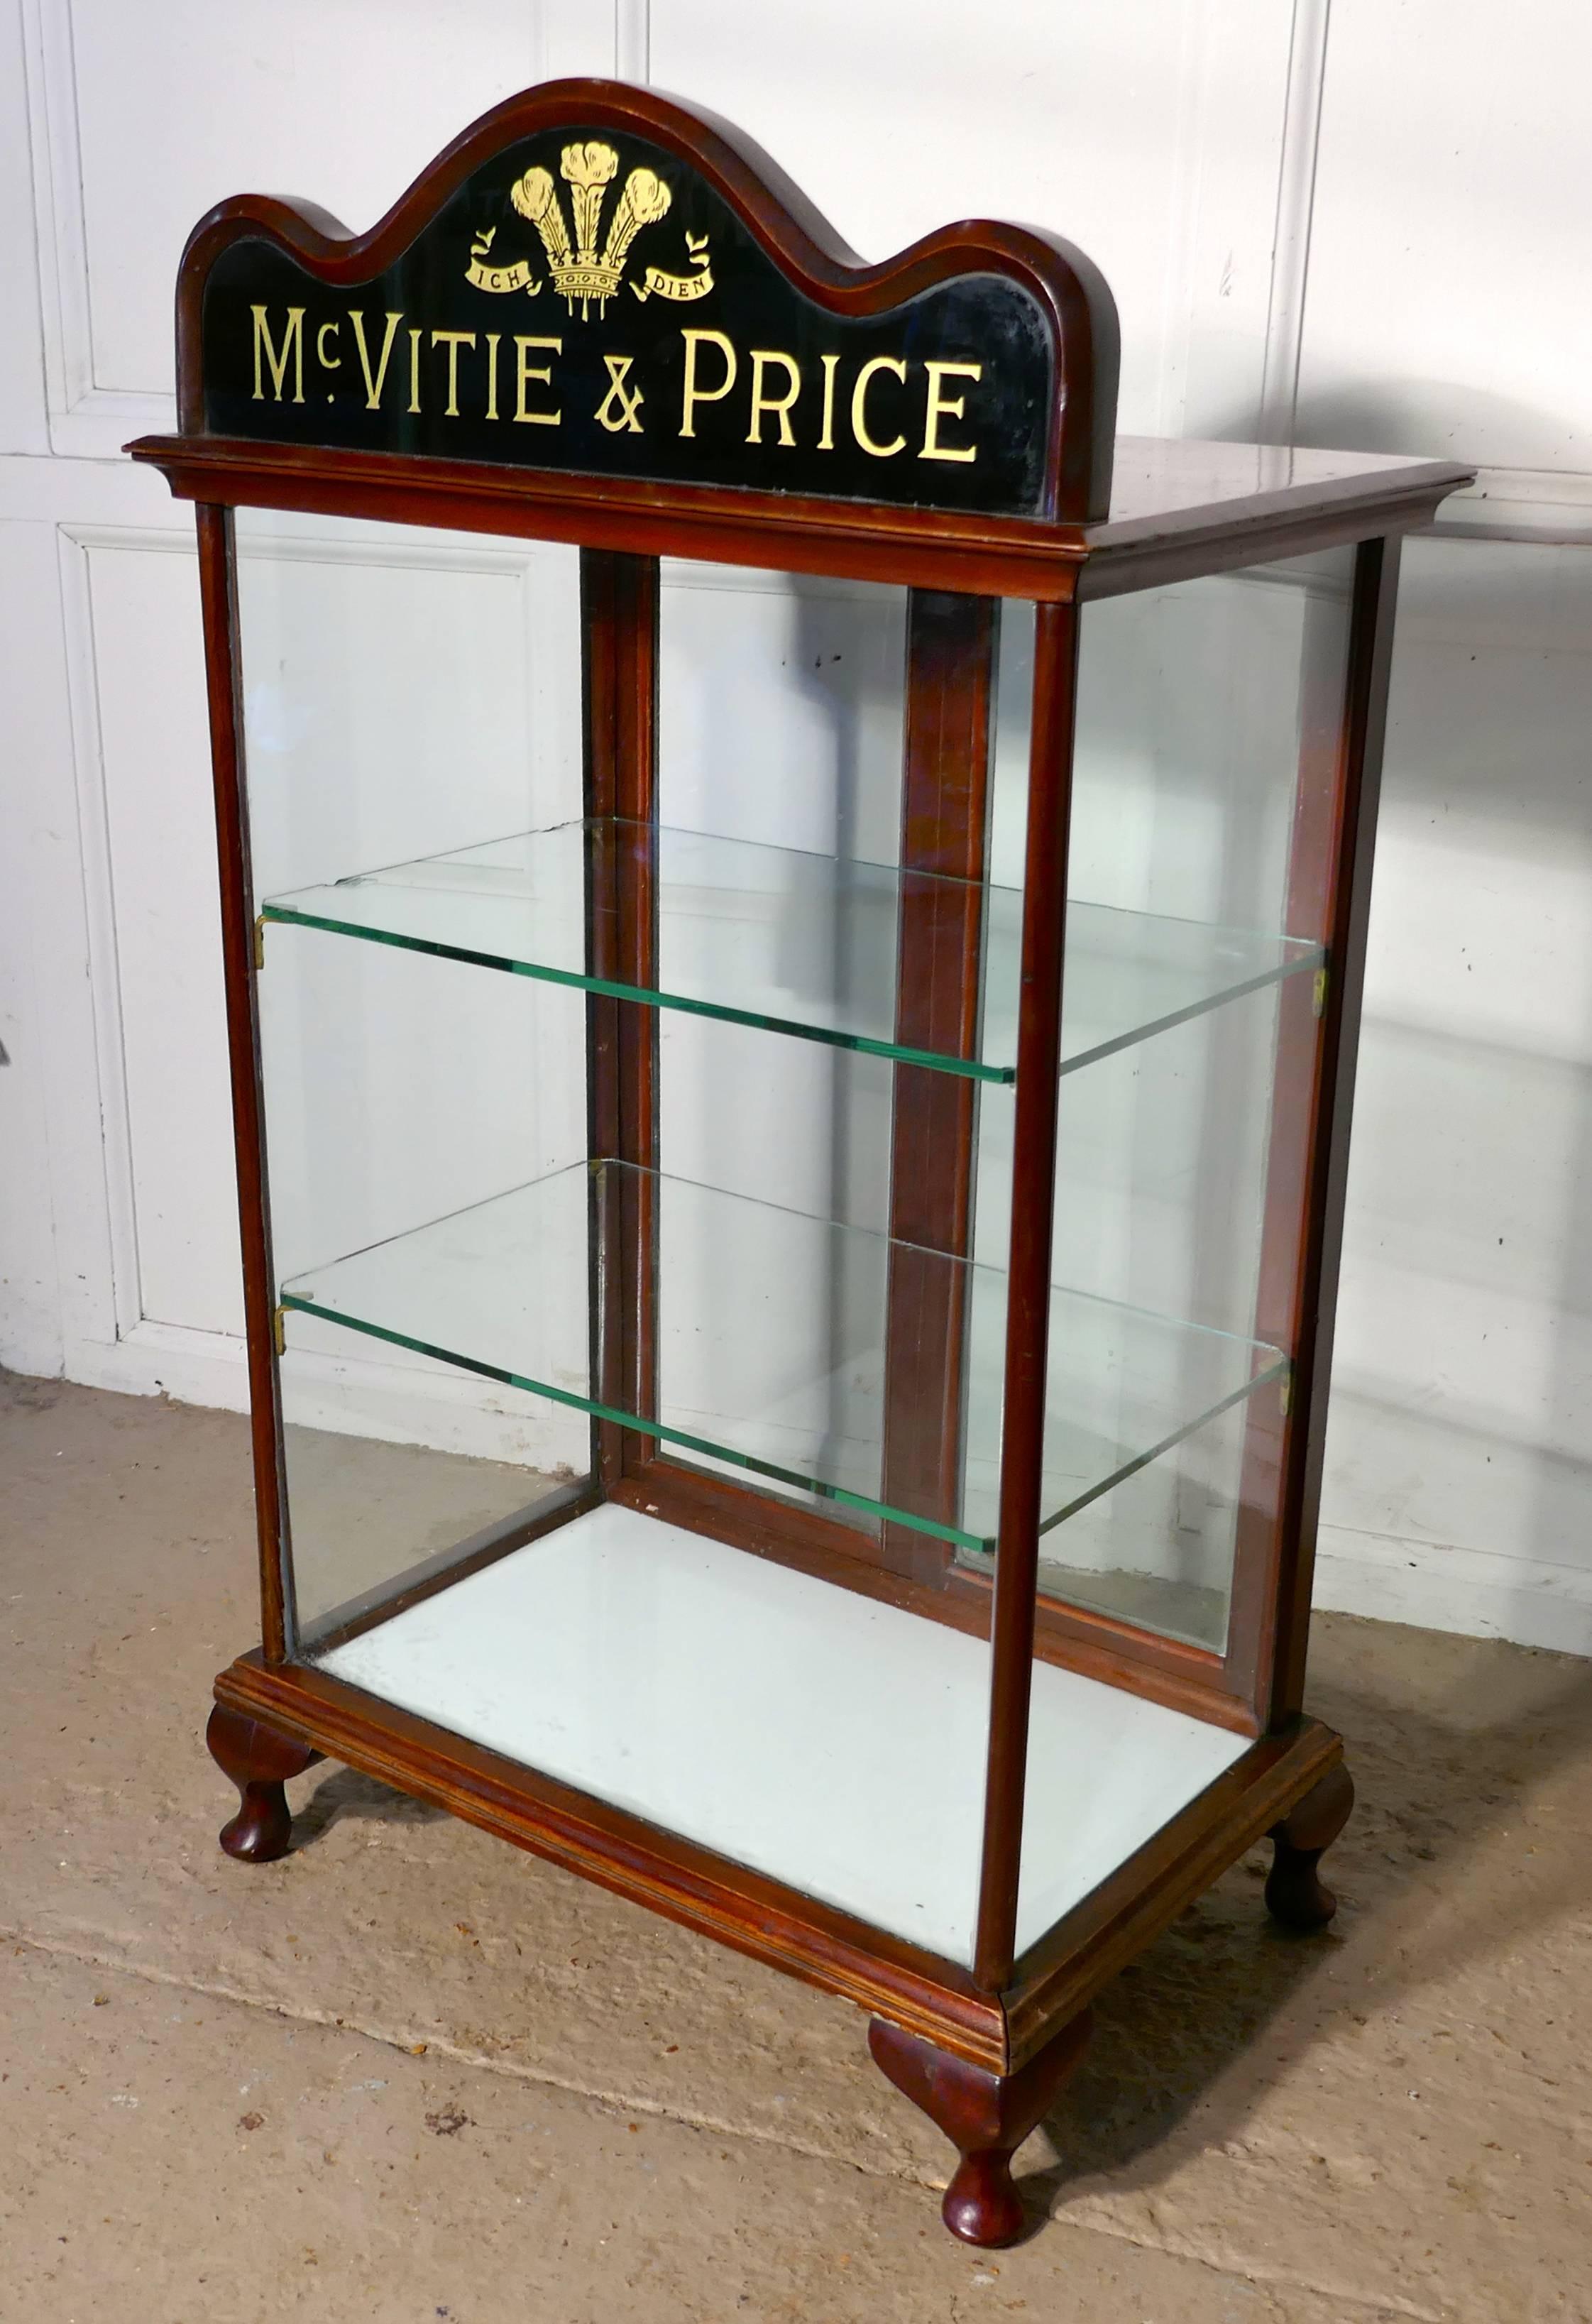 20th Century McVitie & Price Cake Shop Display Cabinet